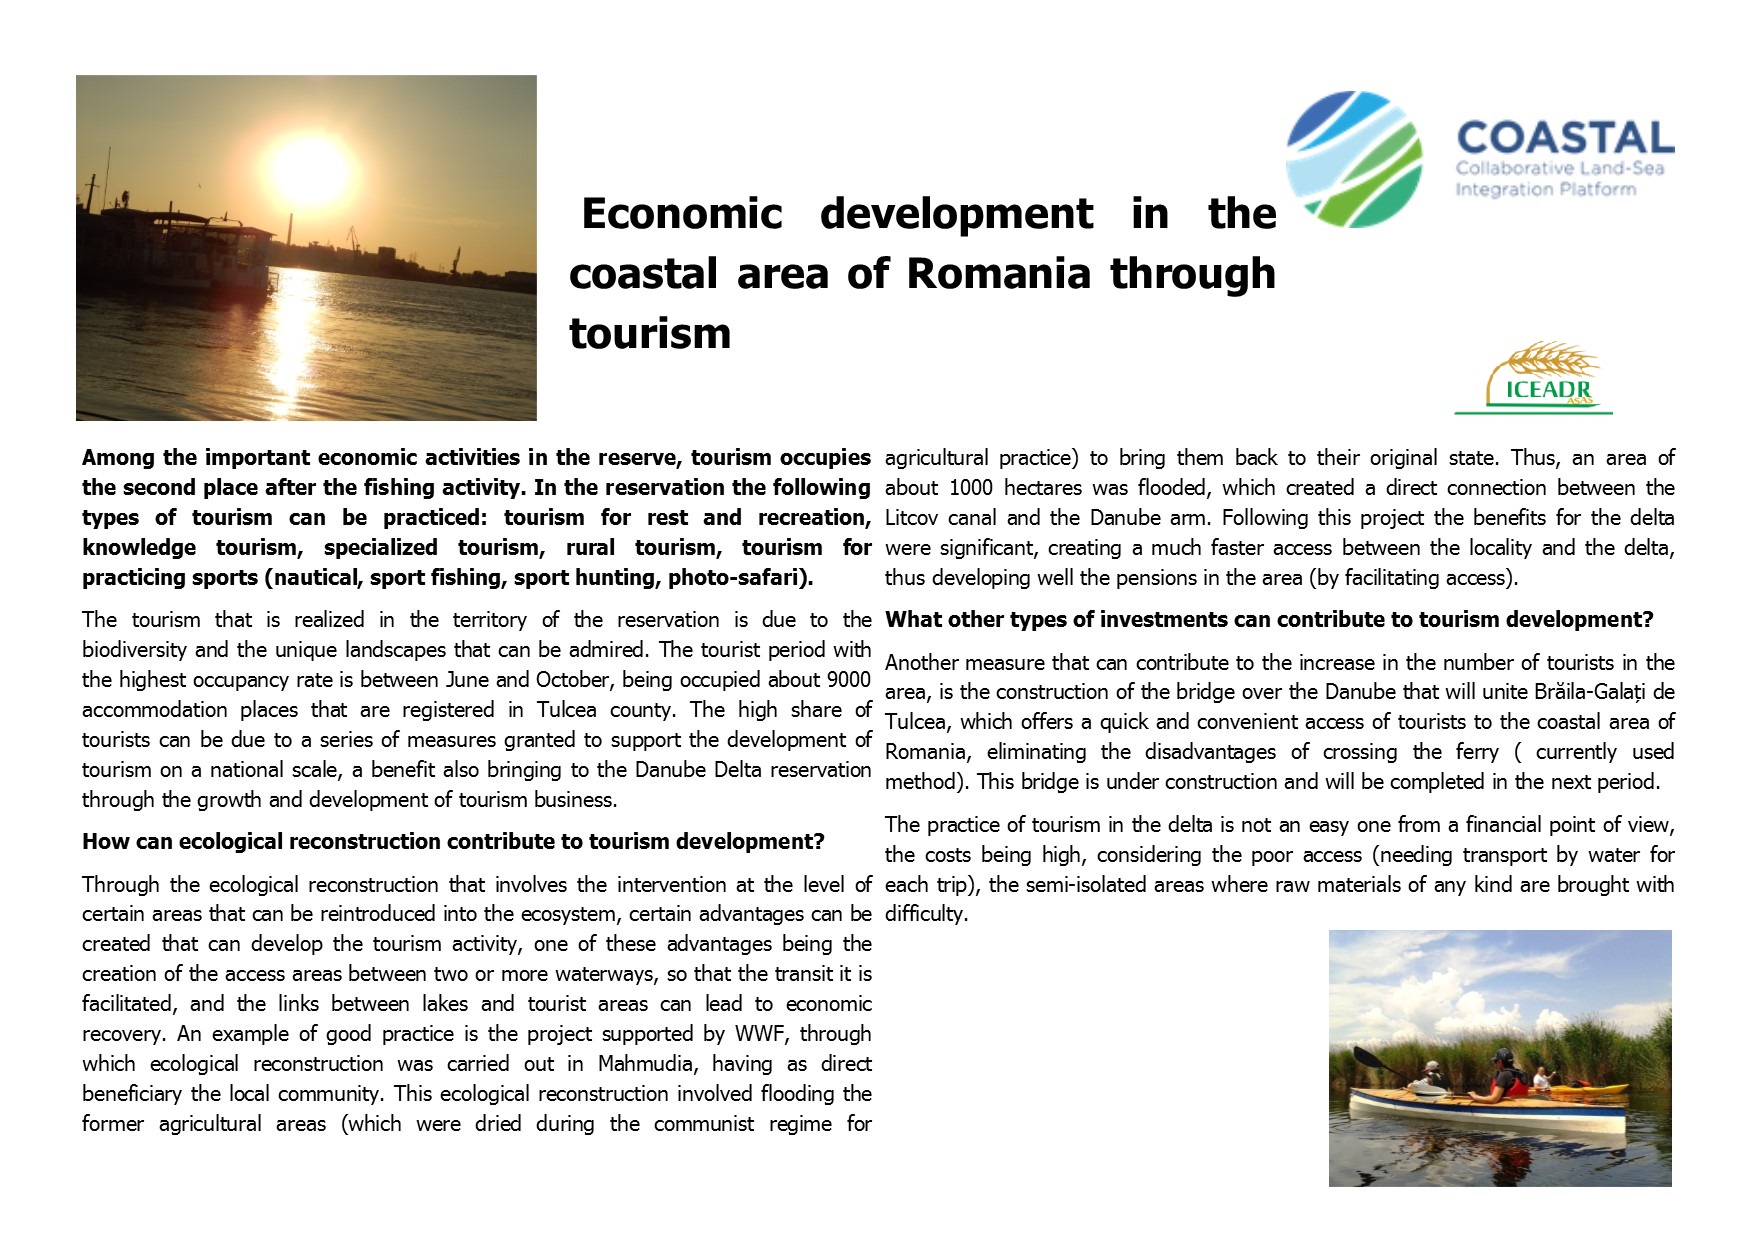 Economic development in the coastal area of Romania through tourism